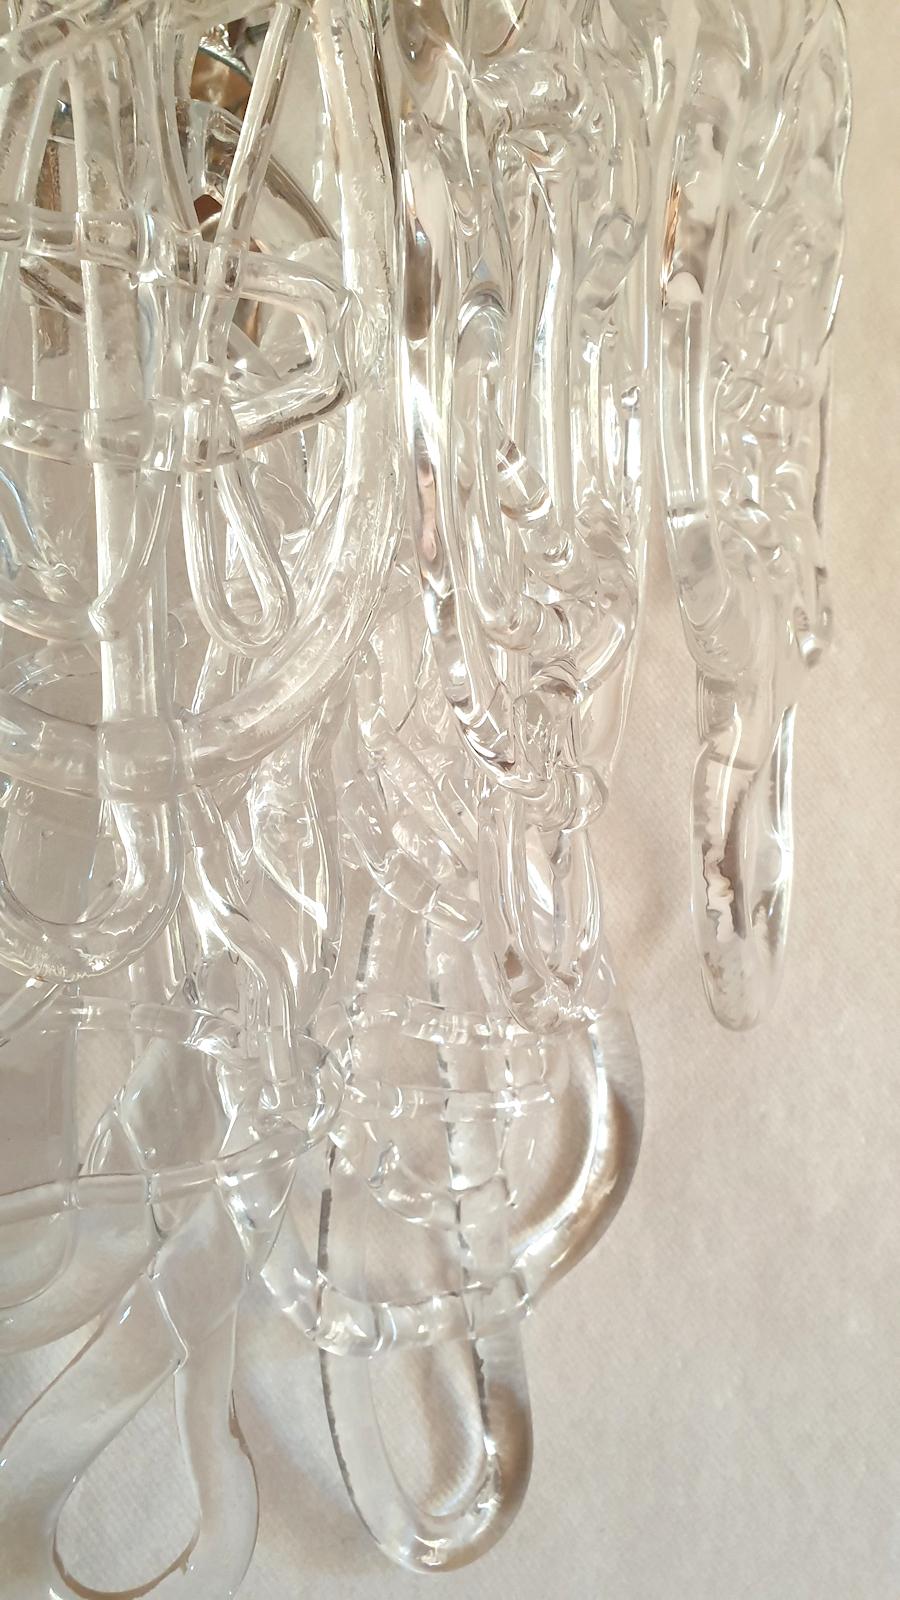 Chrome Mid Century Modern Murano Glass Sconces, by Mazzega - a pair